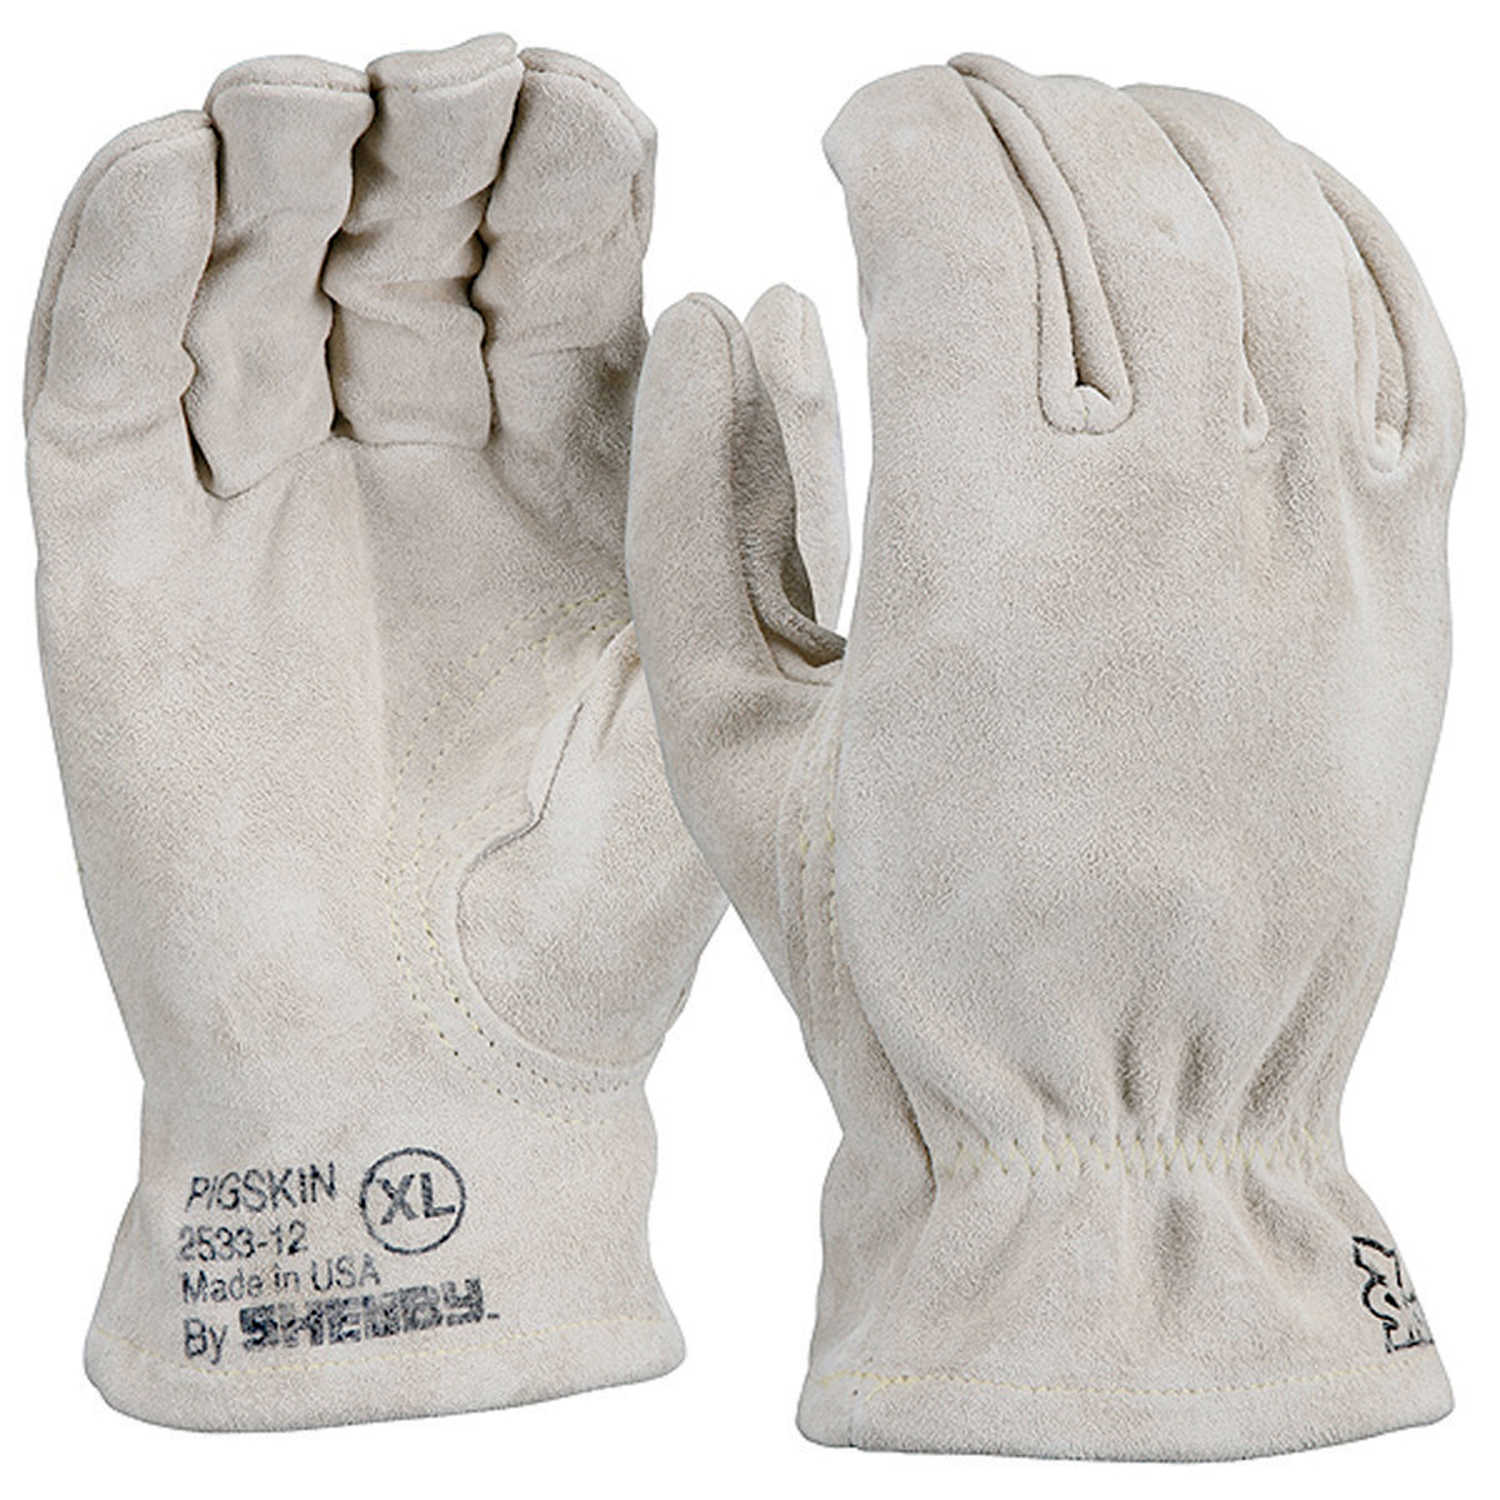 NFPA Wildland Firefighting Gloves Large 